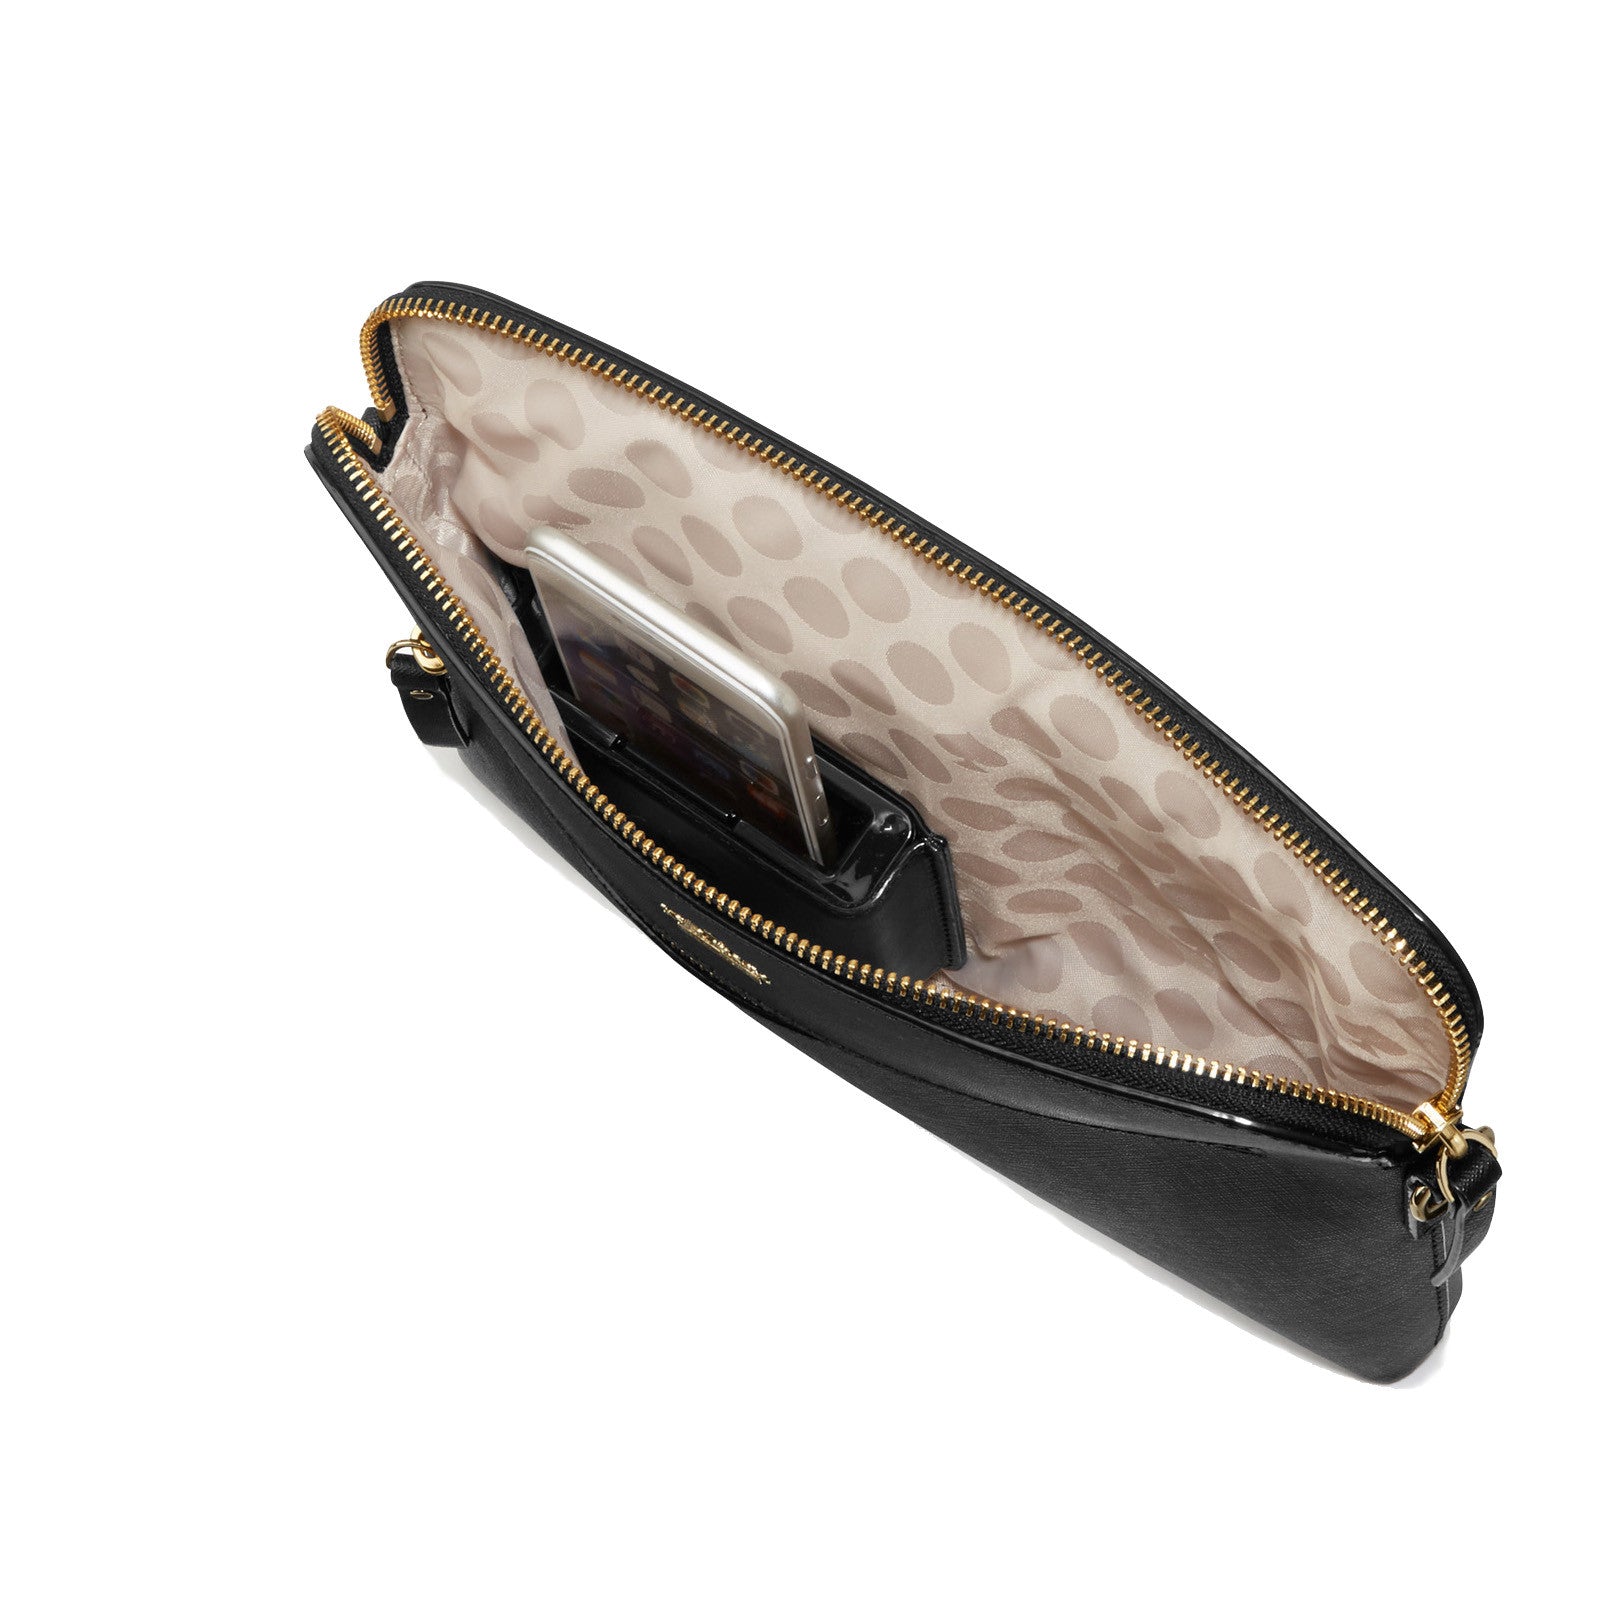 Zana Black Crossbody Handbag with Phone Charger | Everpurse